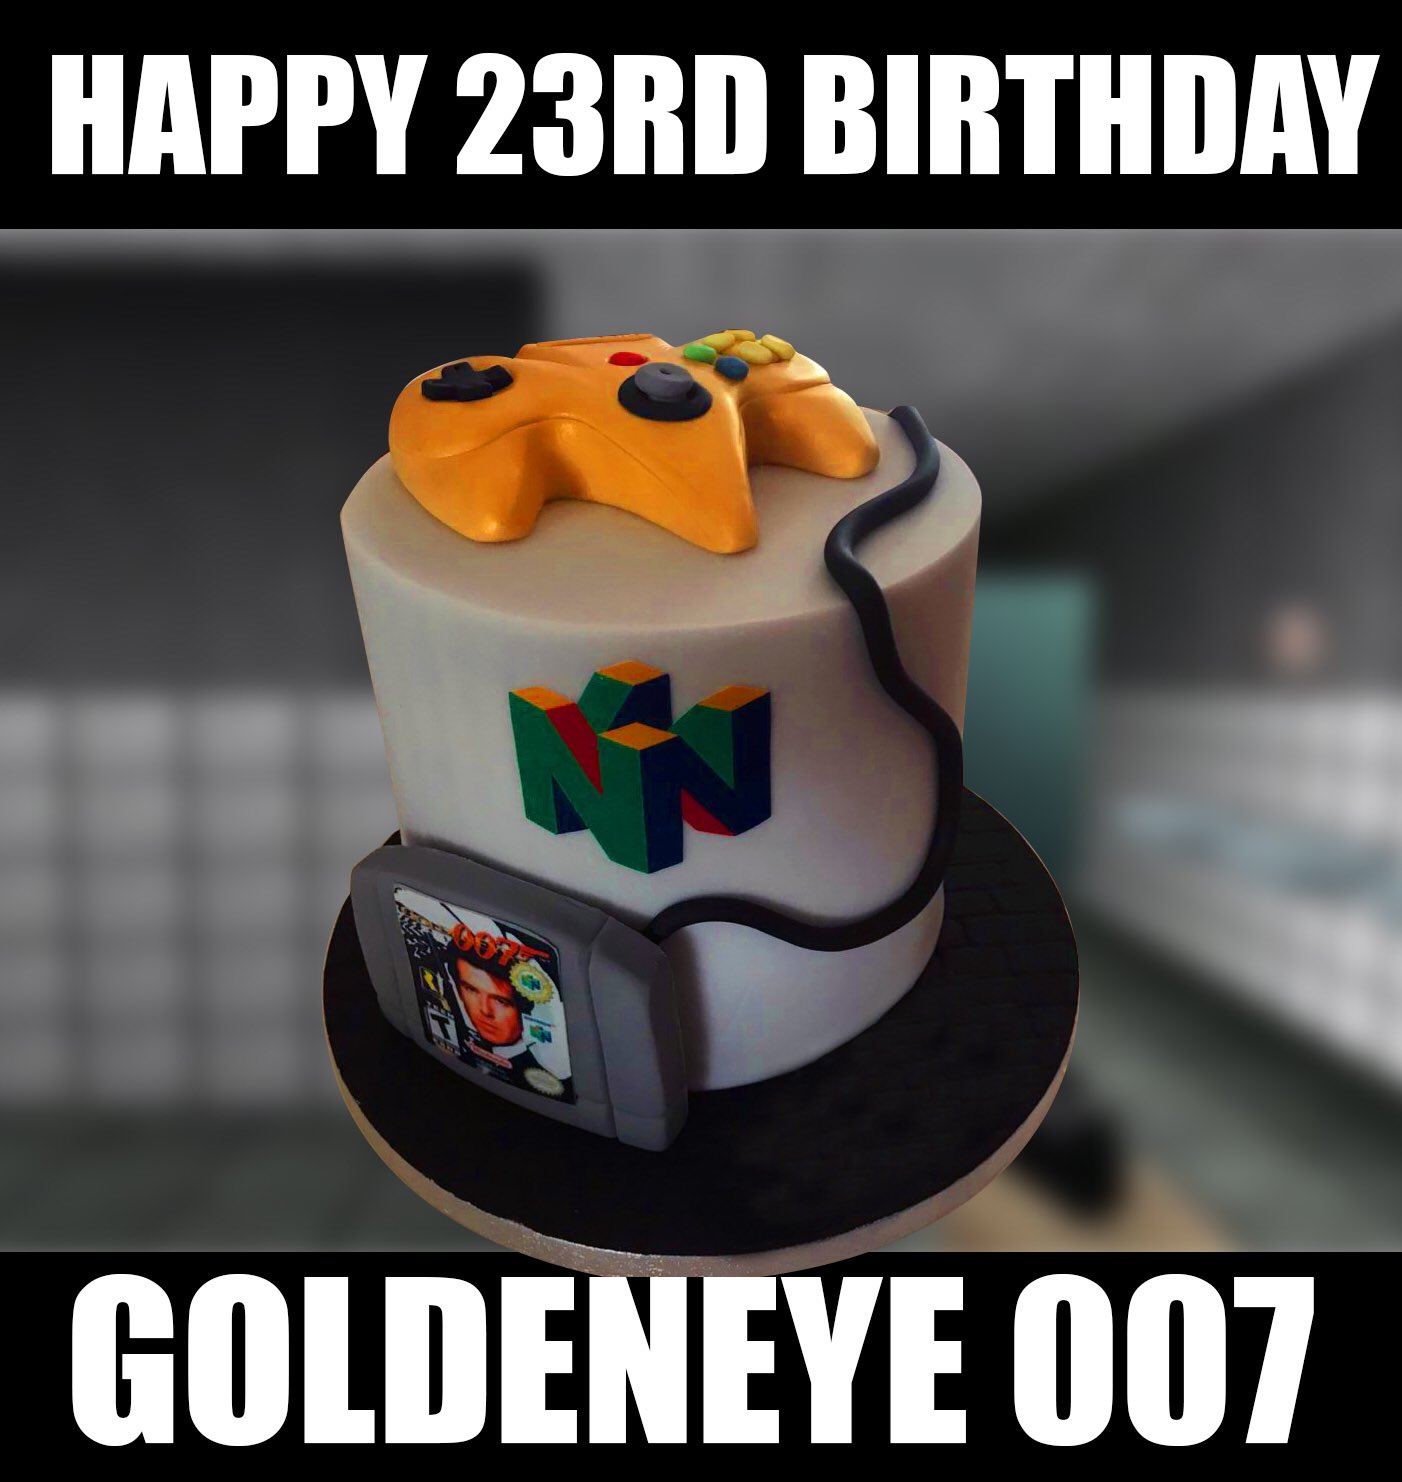 Happy Birthday GoldenEye 007! – MLGG: Pop Culture News, Reviews & Interviews